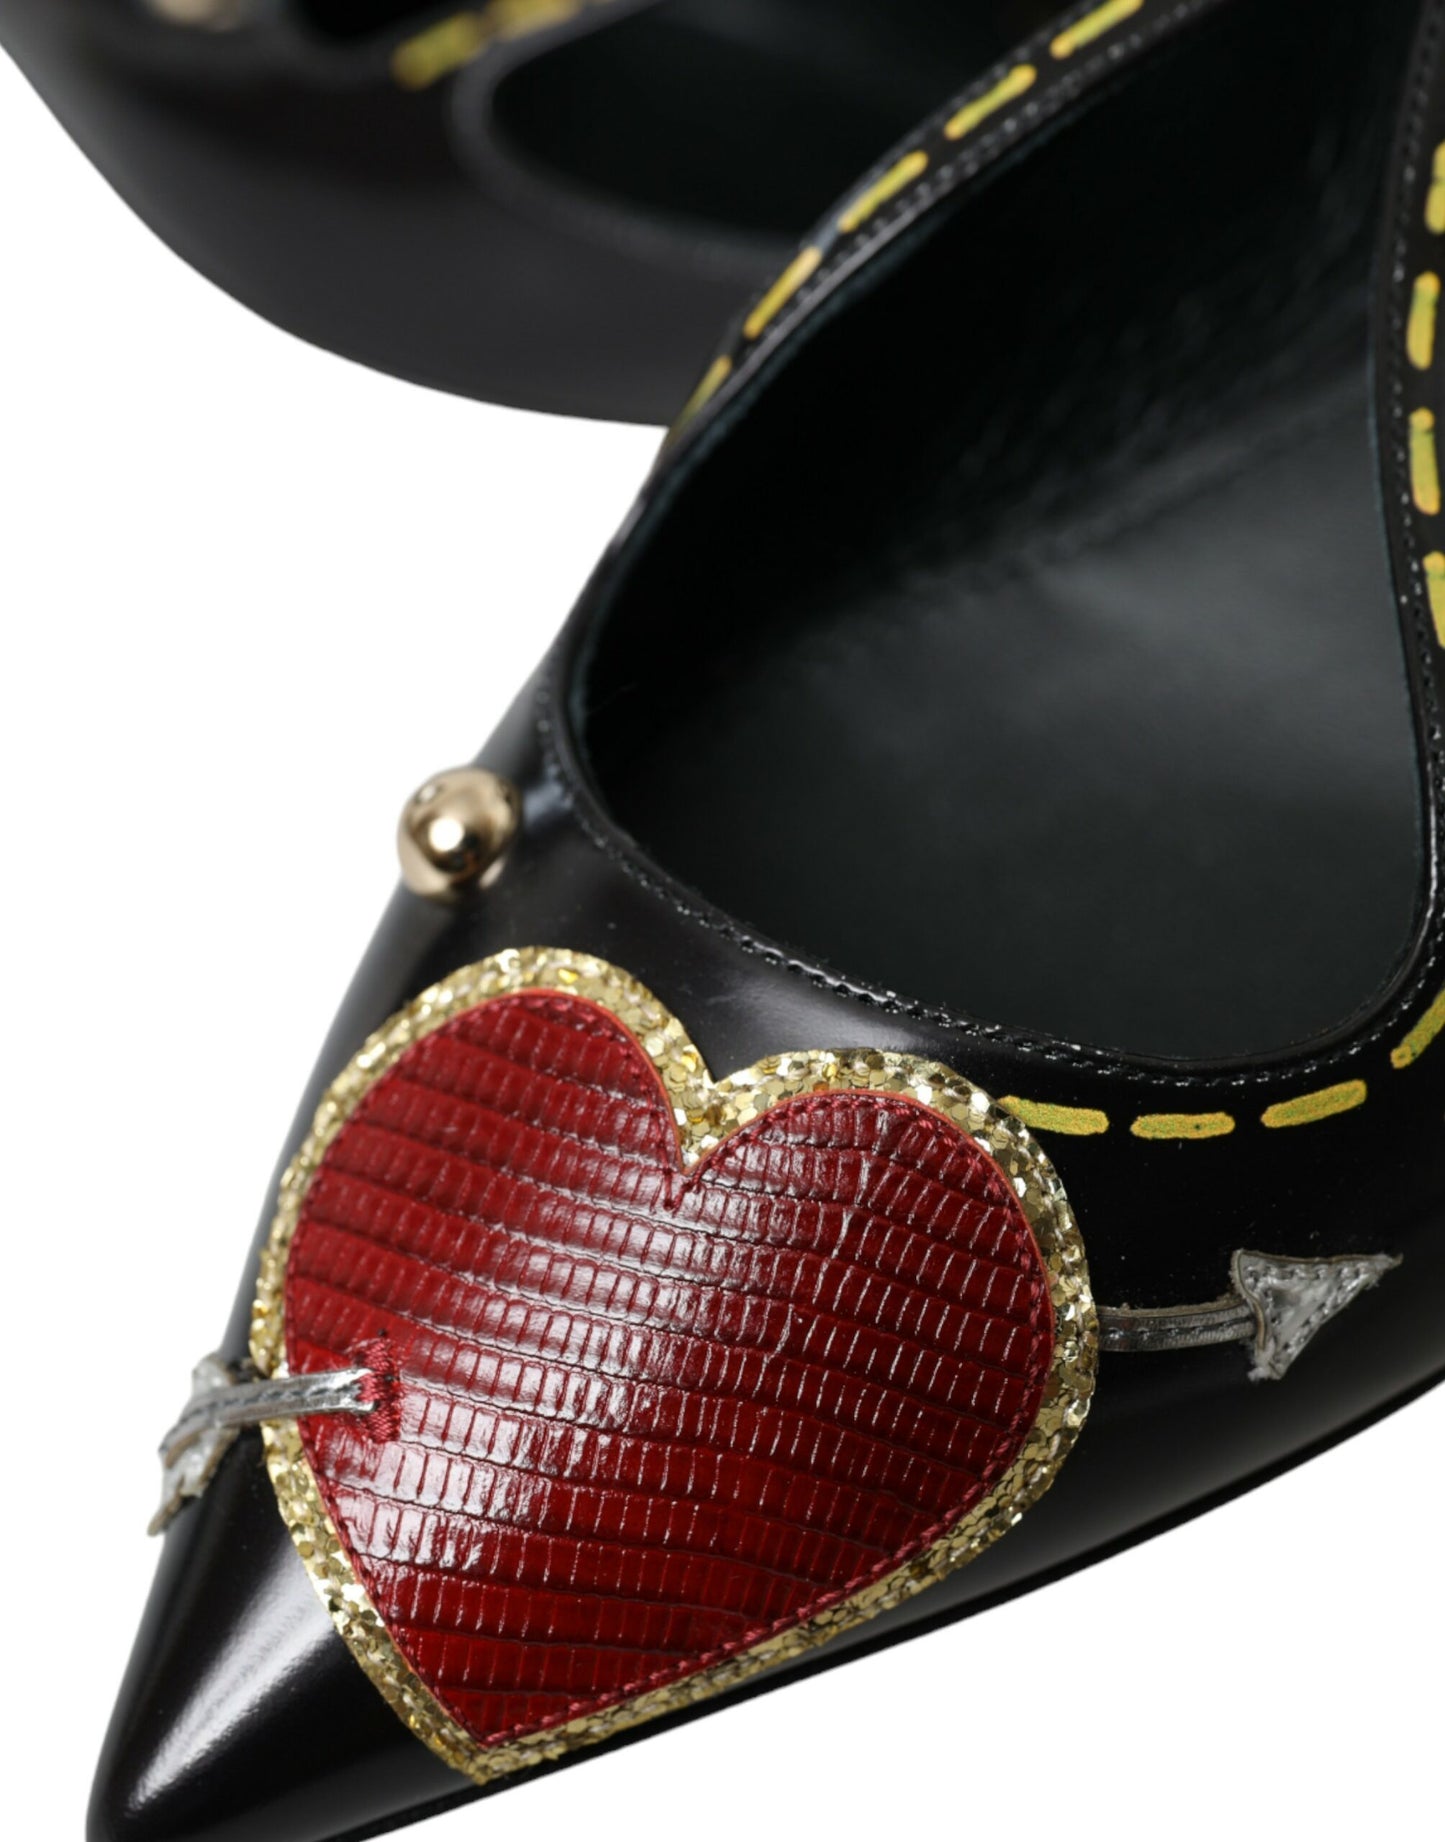 Dolce & Gabbana Black Leather Heart Embellished Loafers Shoes